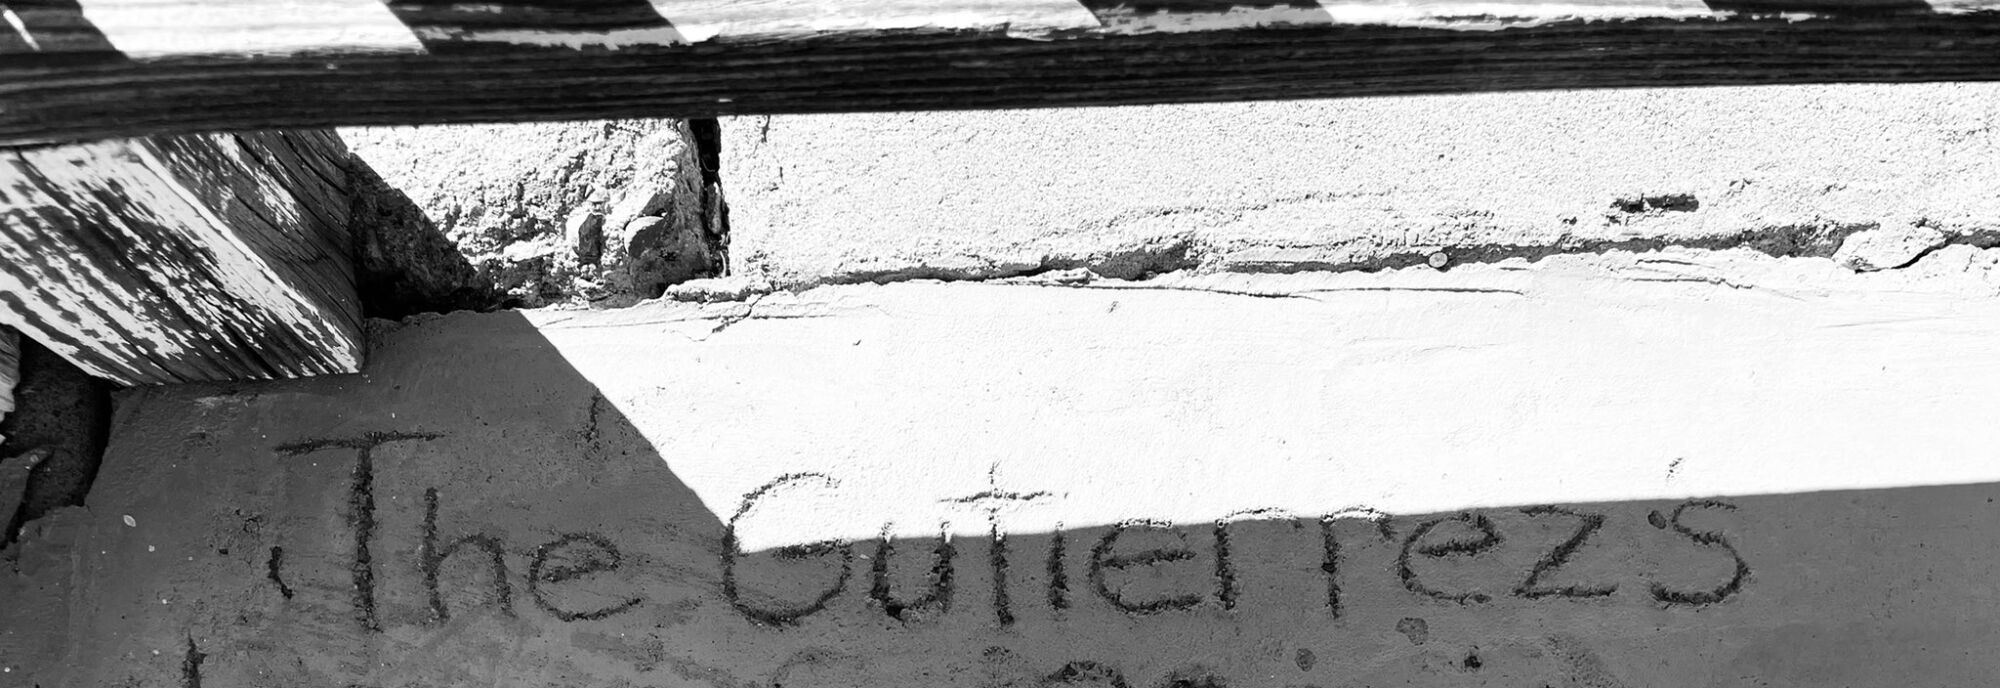 The words "The Gutierrez's" written in cement.